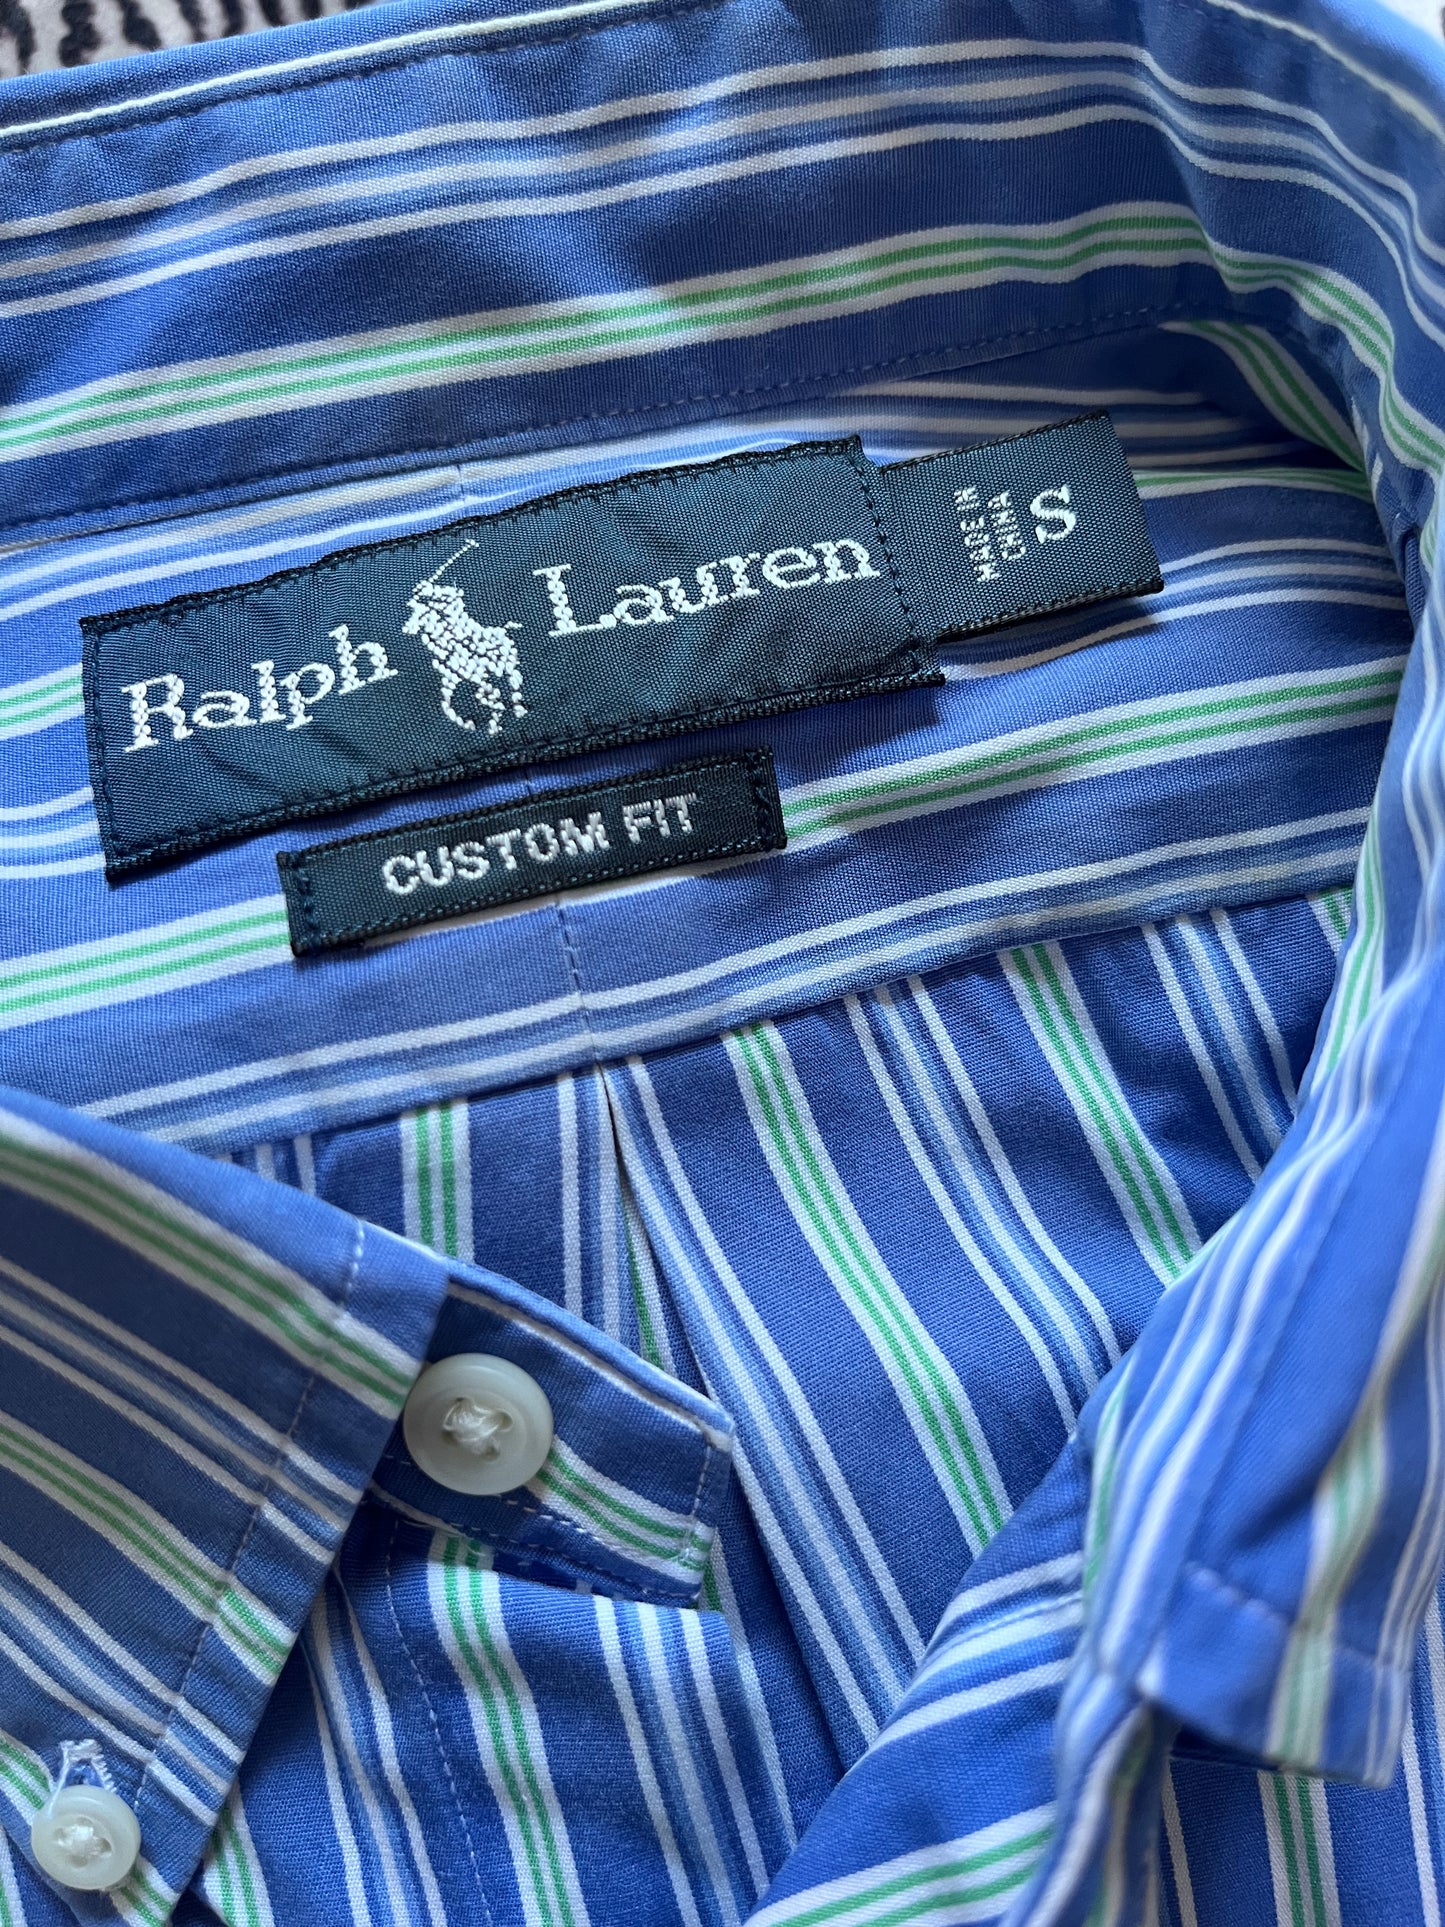 Ralph Lauren 100% Cotton Blue Green Button Down Shirt Size S Classic Fit, Fits Small to Medium